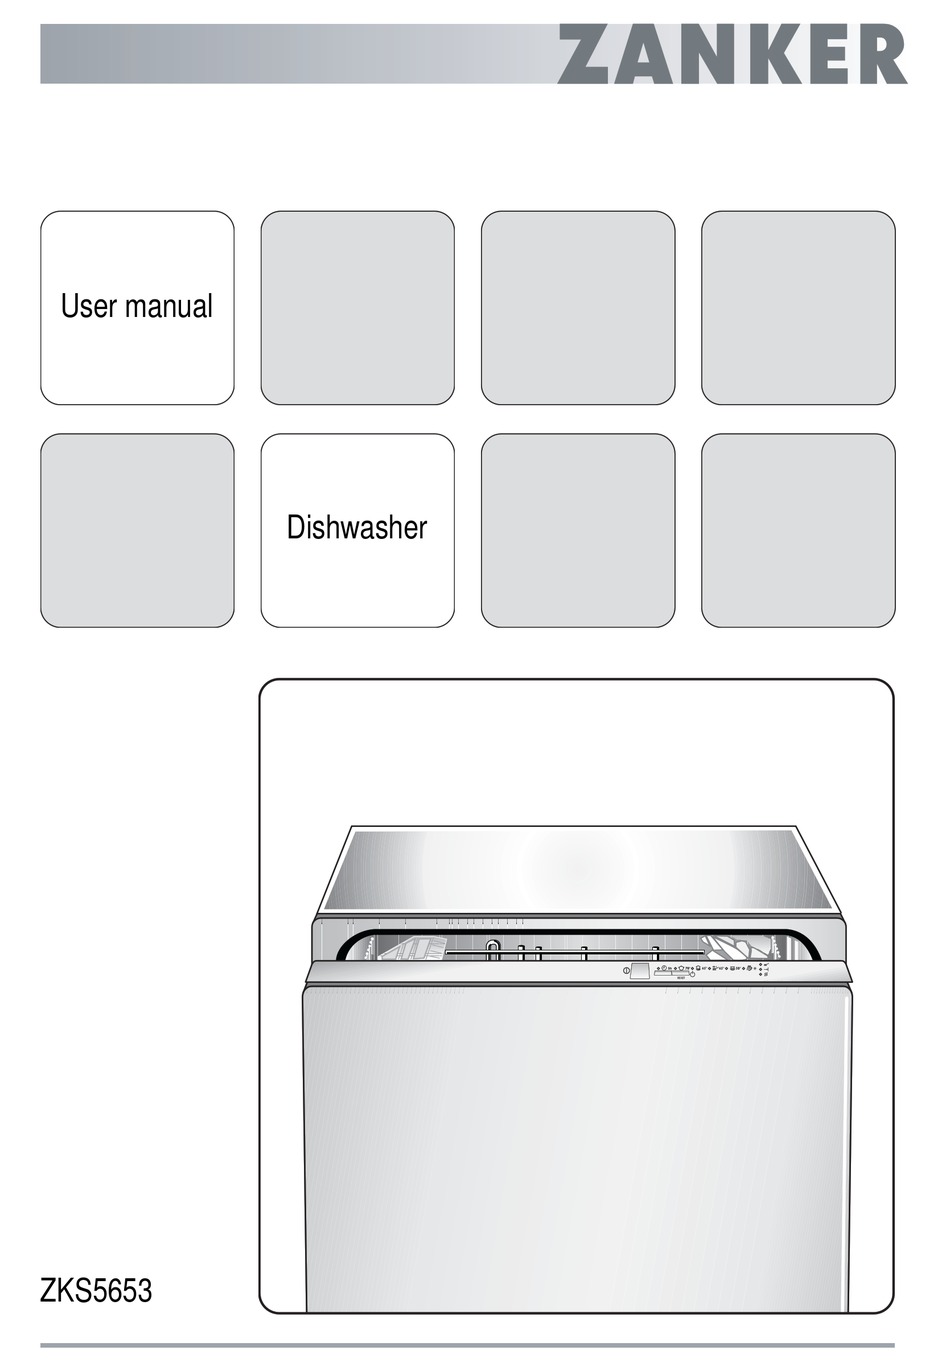 zanker dishwasher